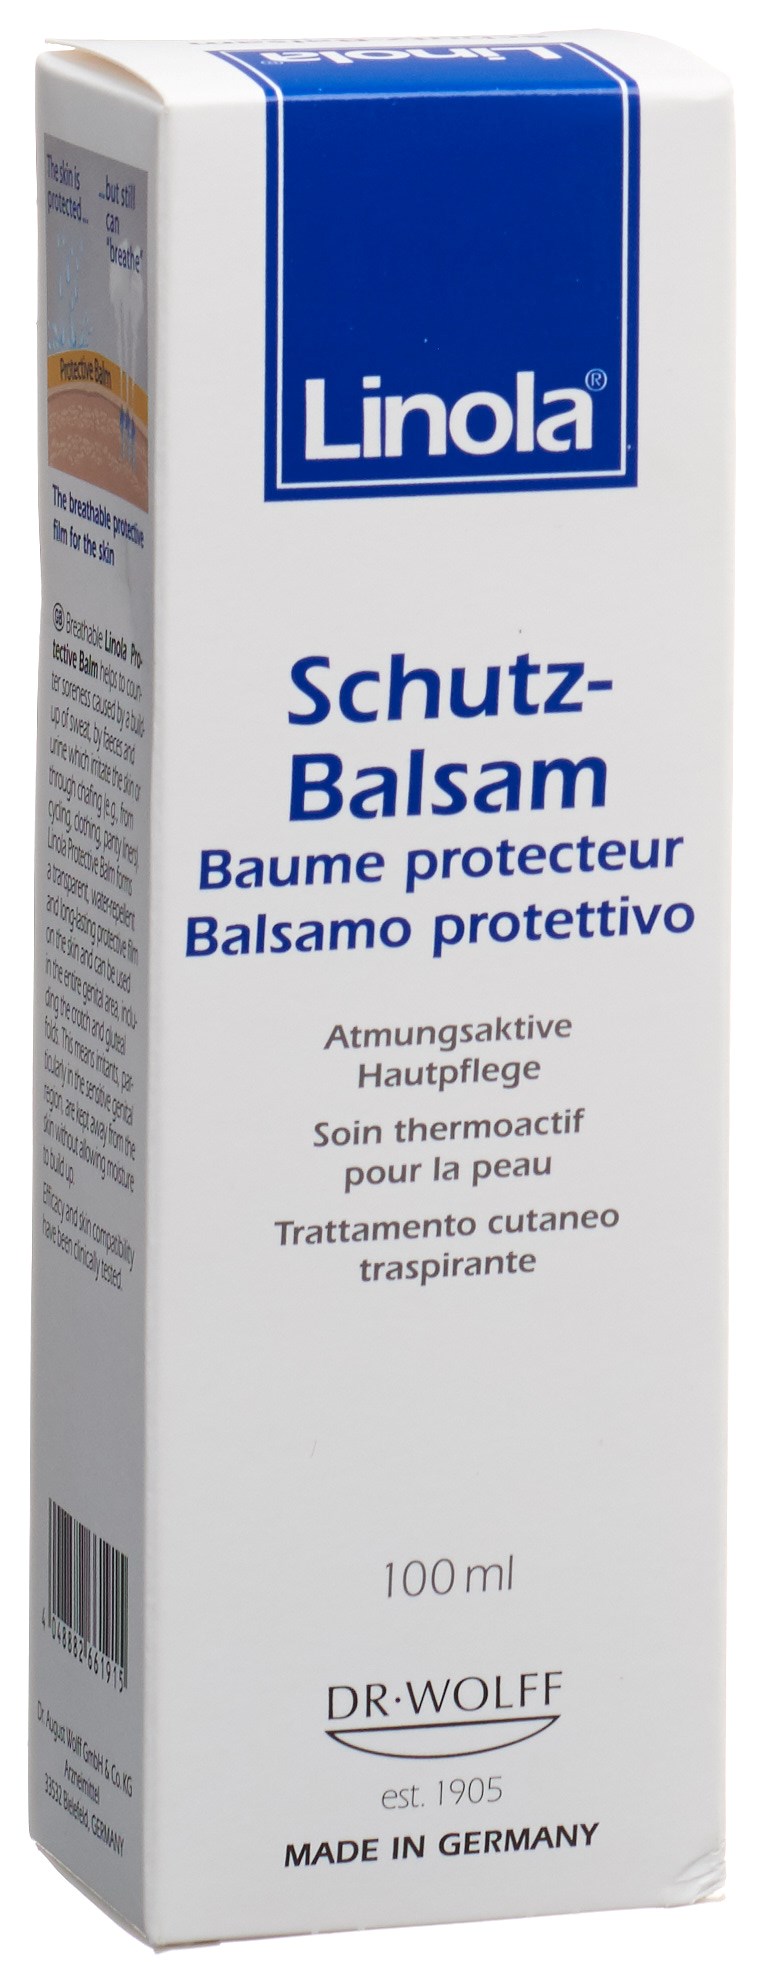 Schutz-Balsam